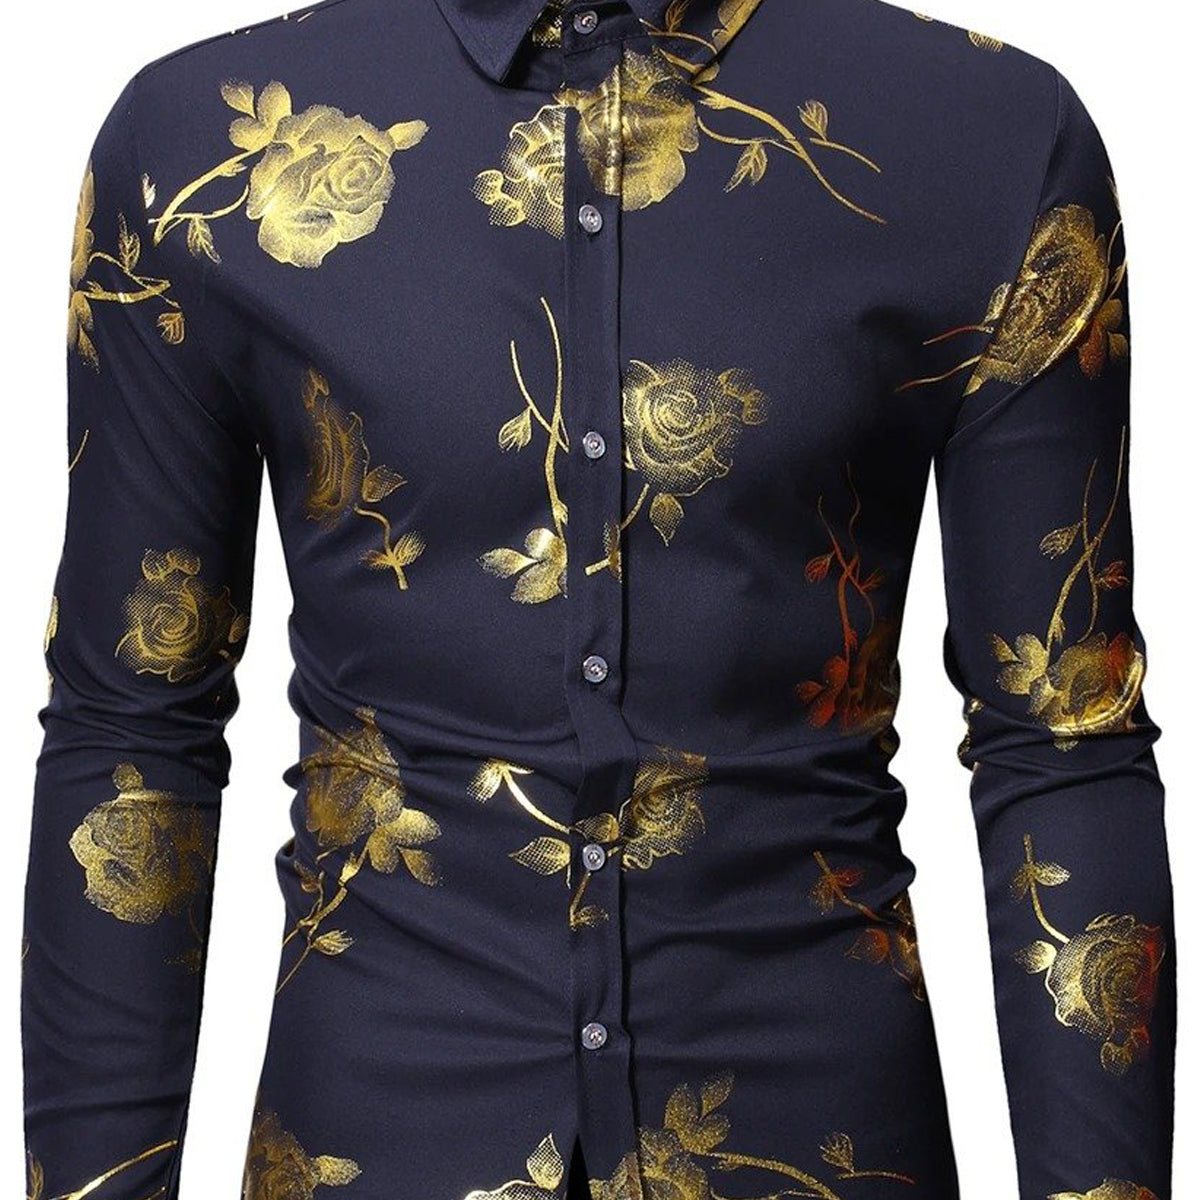 Men's Casual Rose Print Long Sleeve Shirt